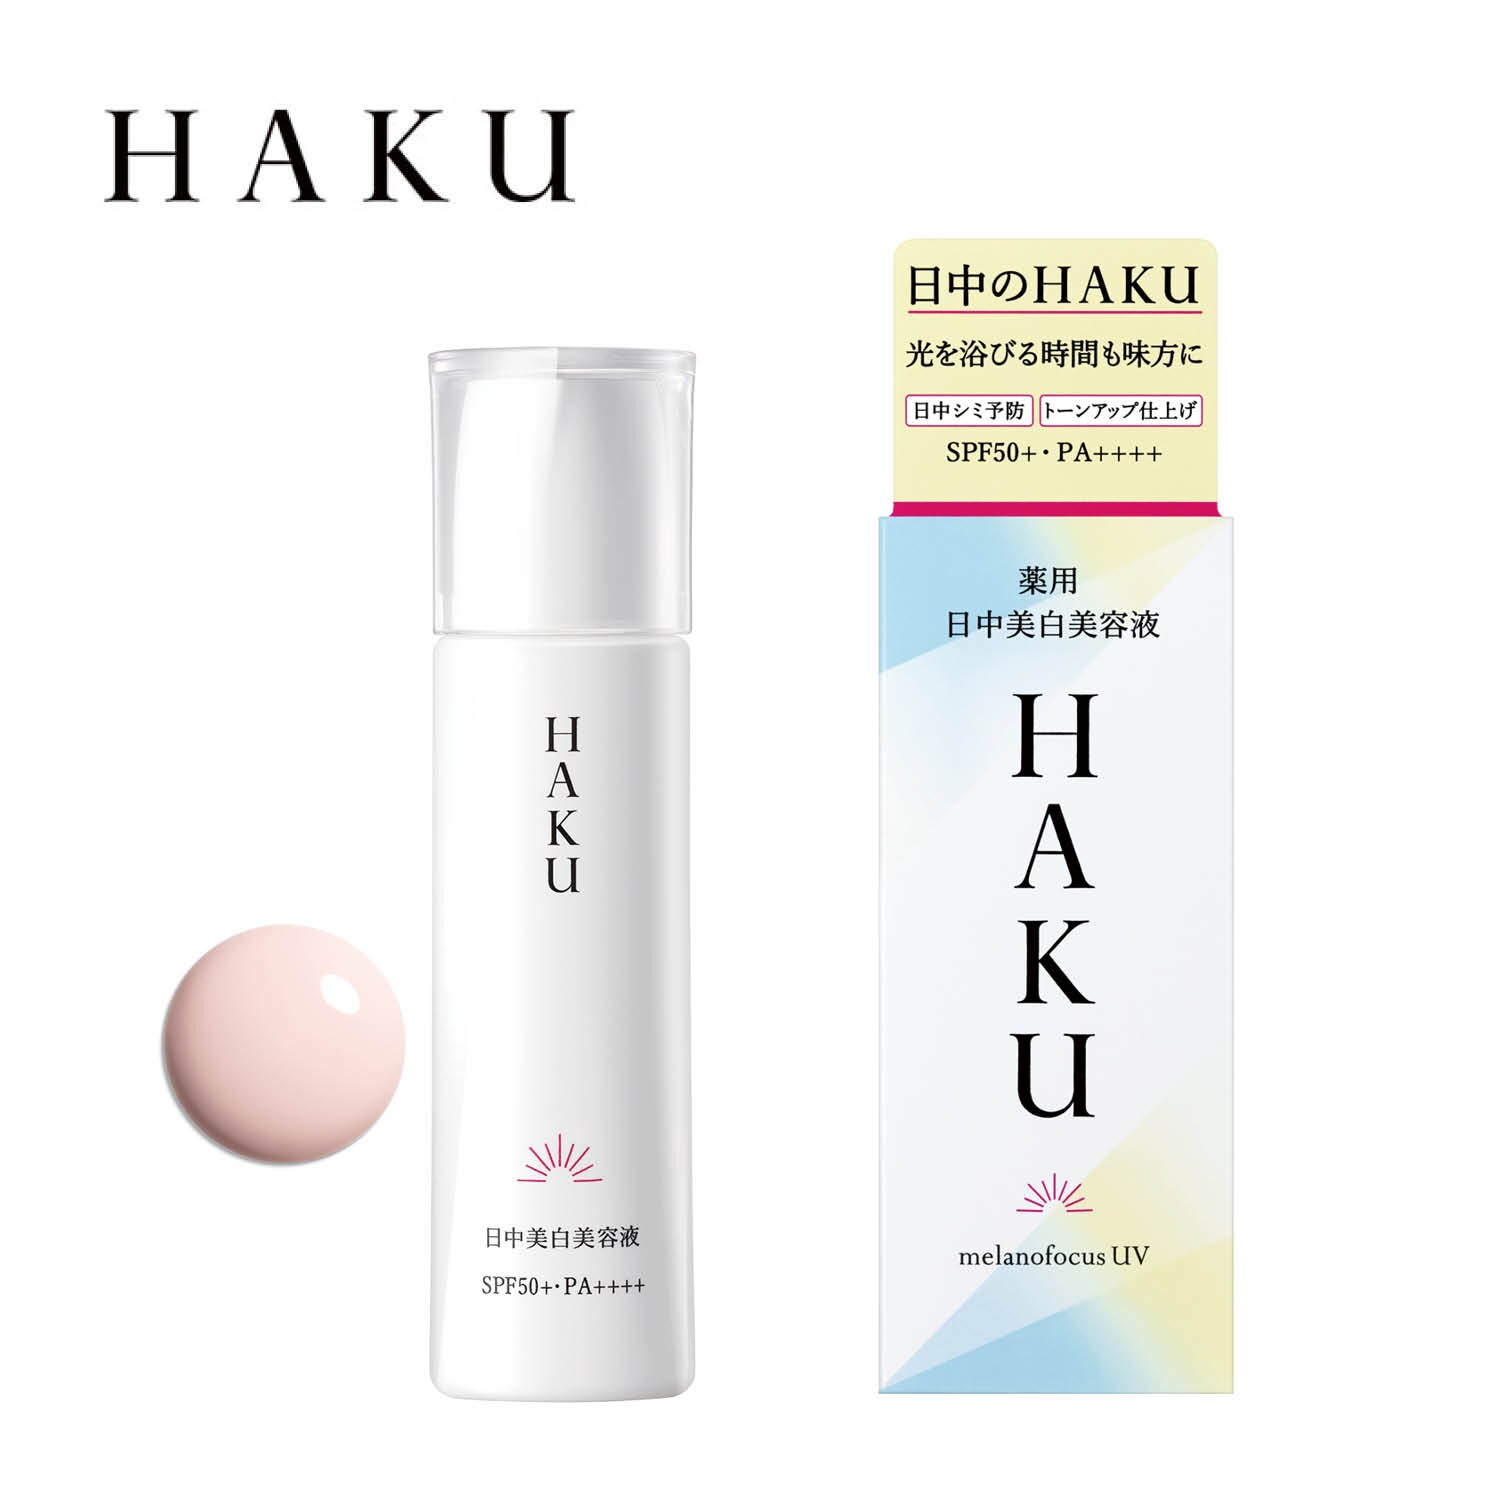 【ハク/HAKU】HAKU 薬用 日中美白美容液